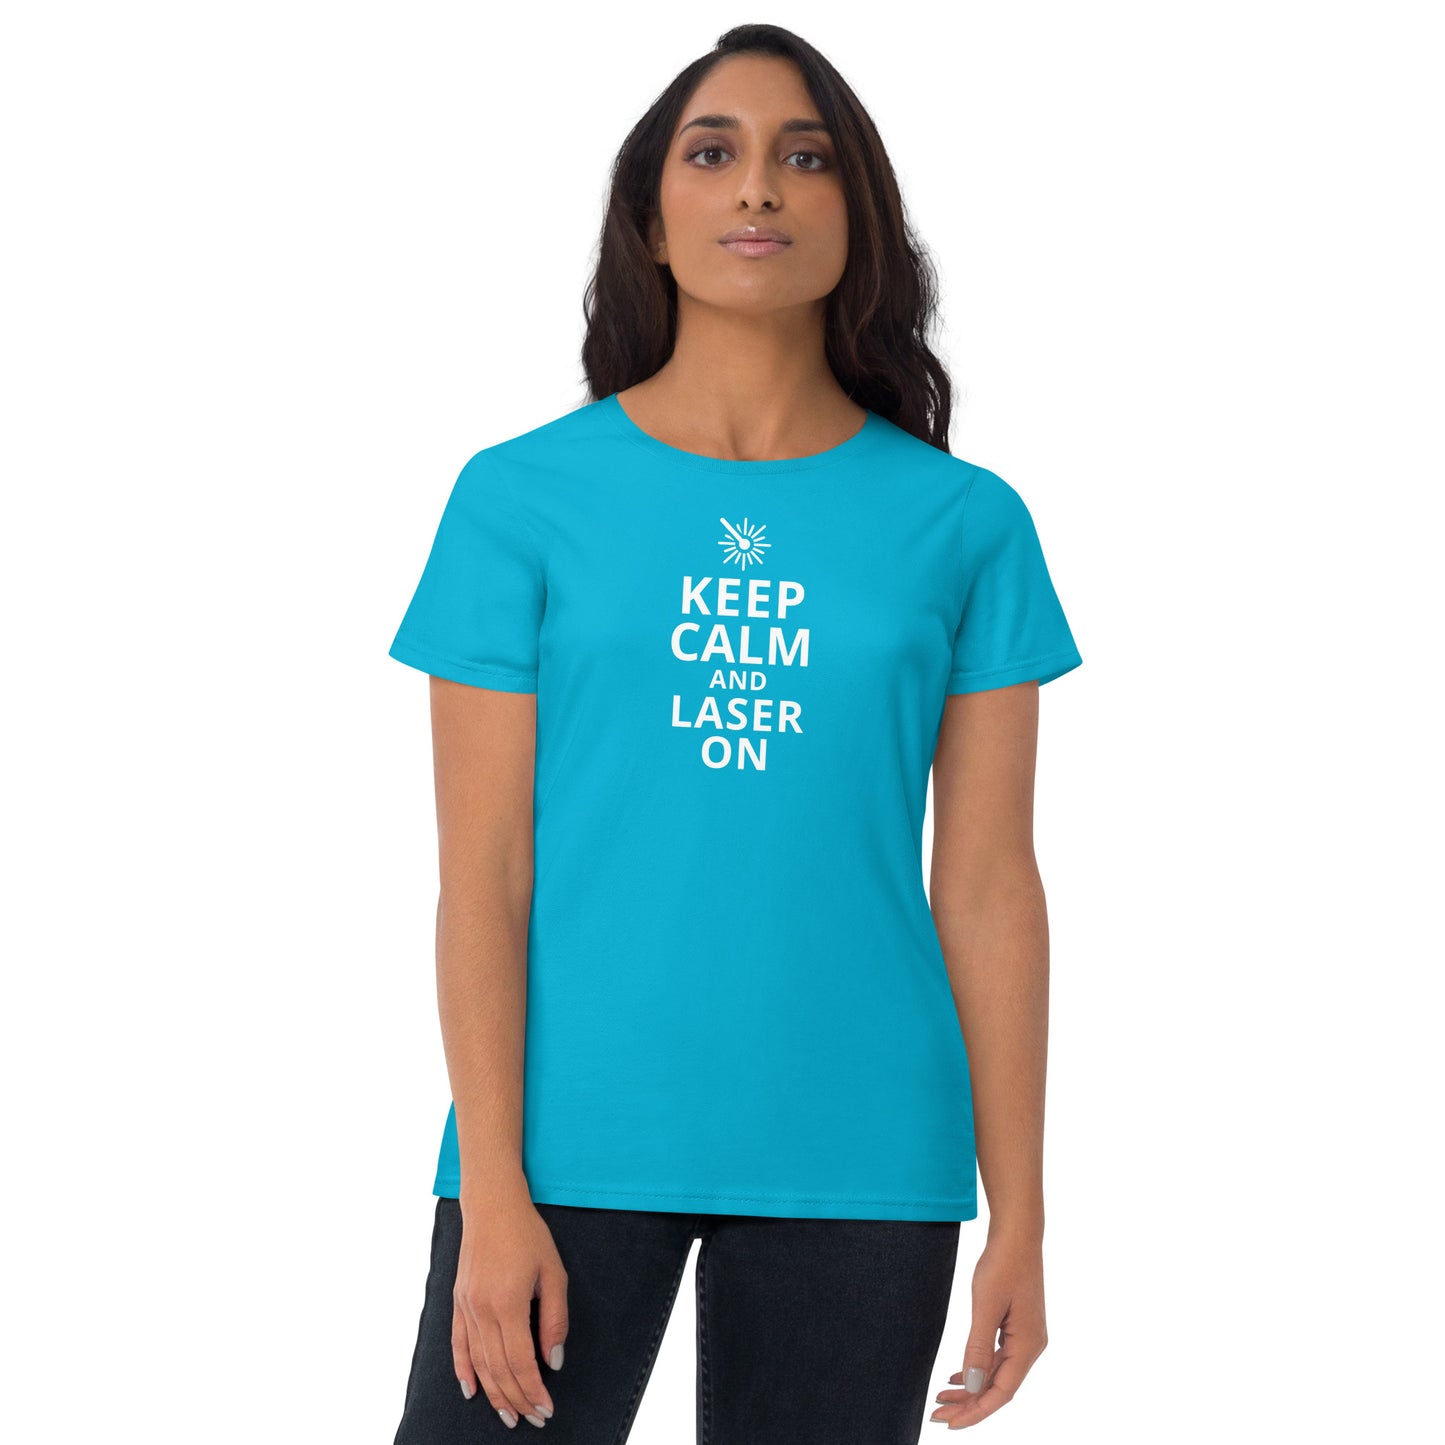 Keep Calm and Laser On - Women's short sleeve t-shirt